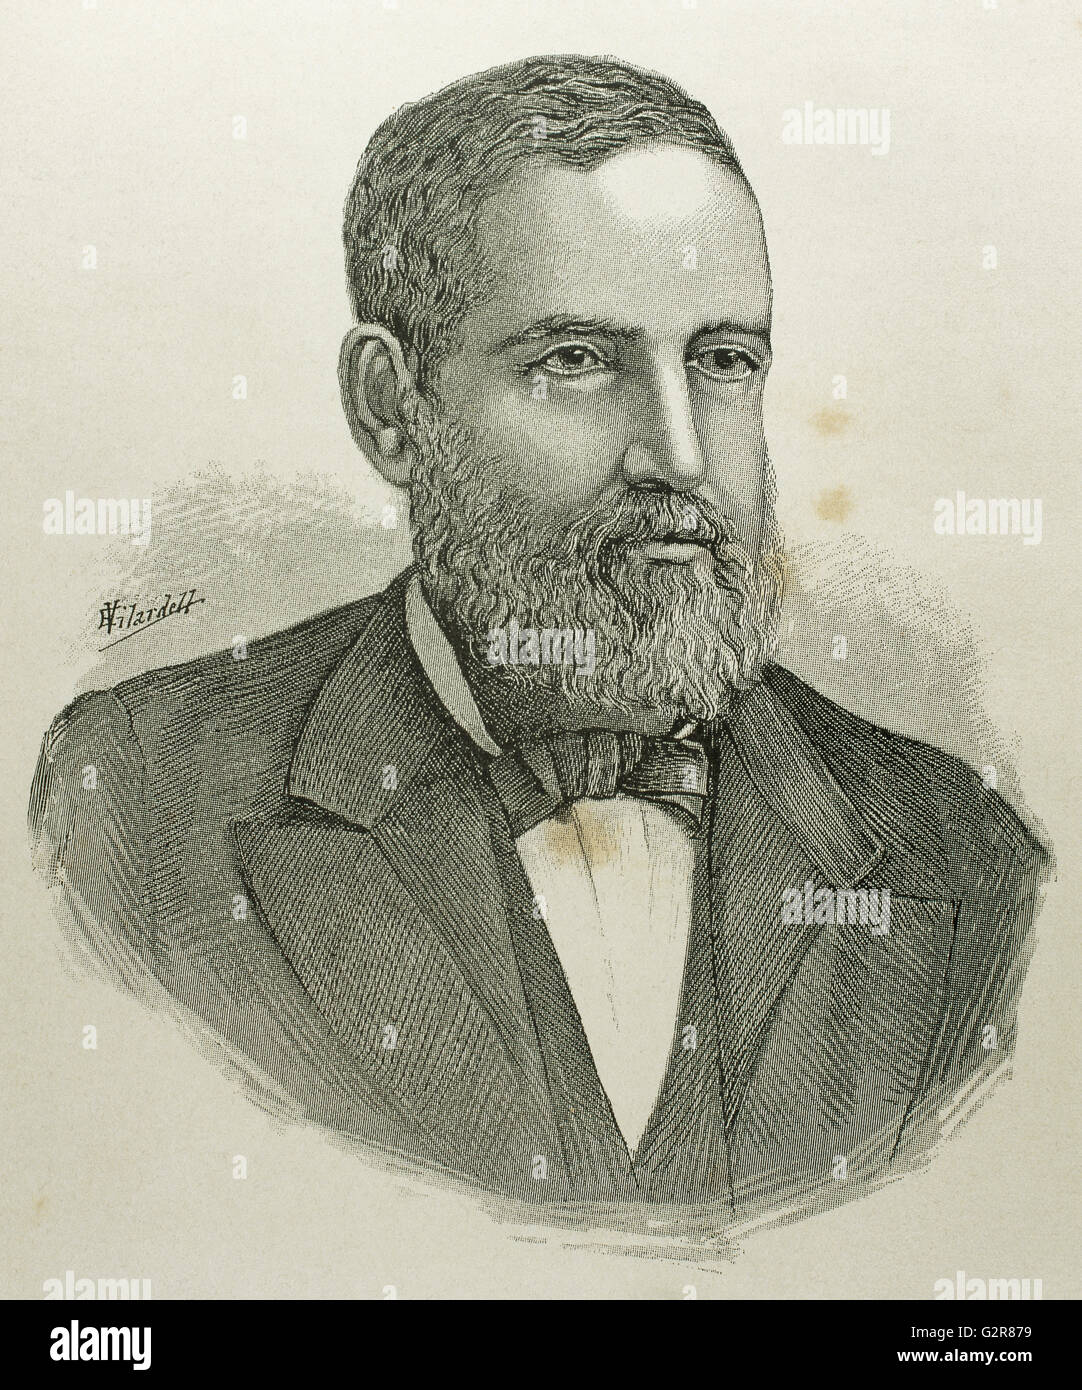 Evaristo Carazo Aranda (1821-1889). President of Nicaragua (1887-1889). Member of the Conservative Party of Nicaragua. Portrait. Engraving at 'Americanos celebres', 1888. Stock Photo